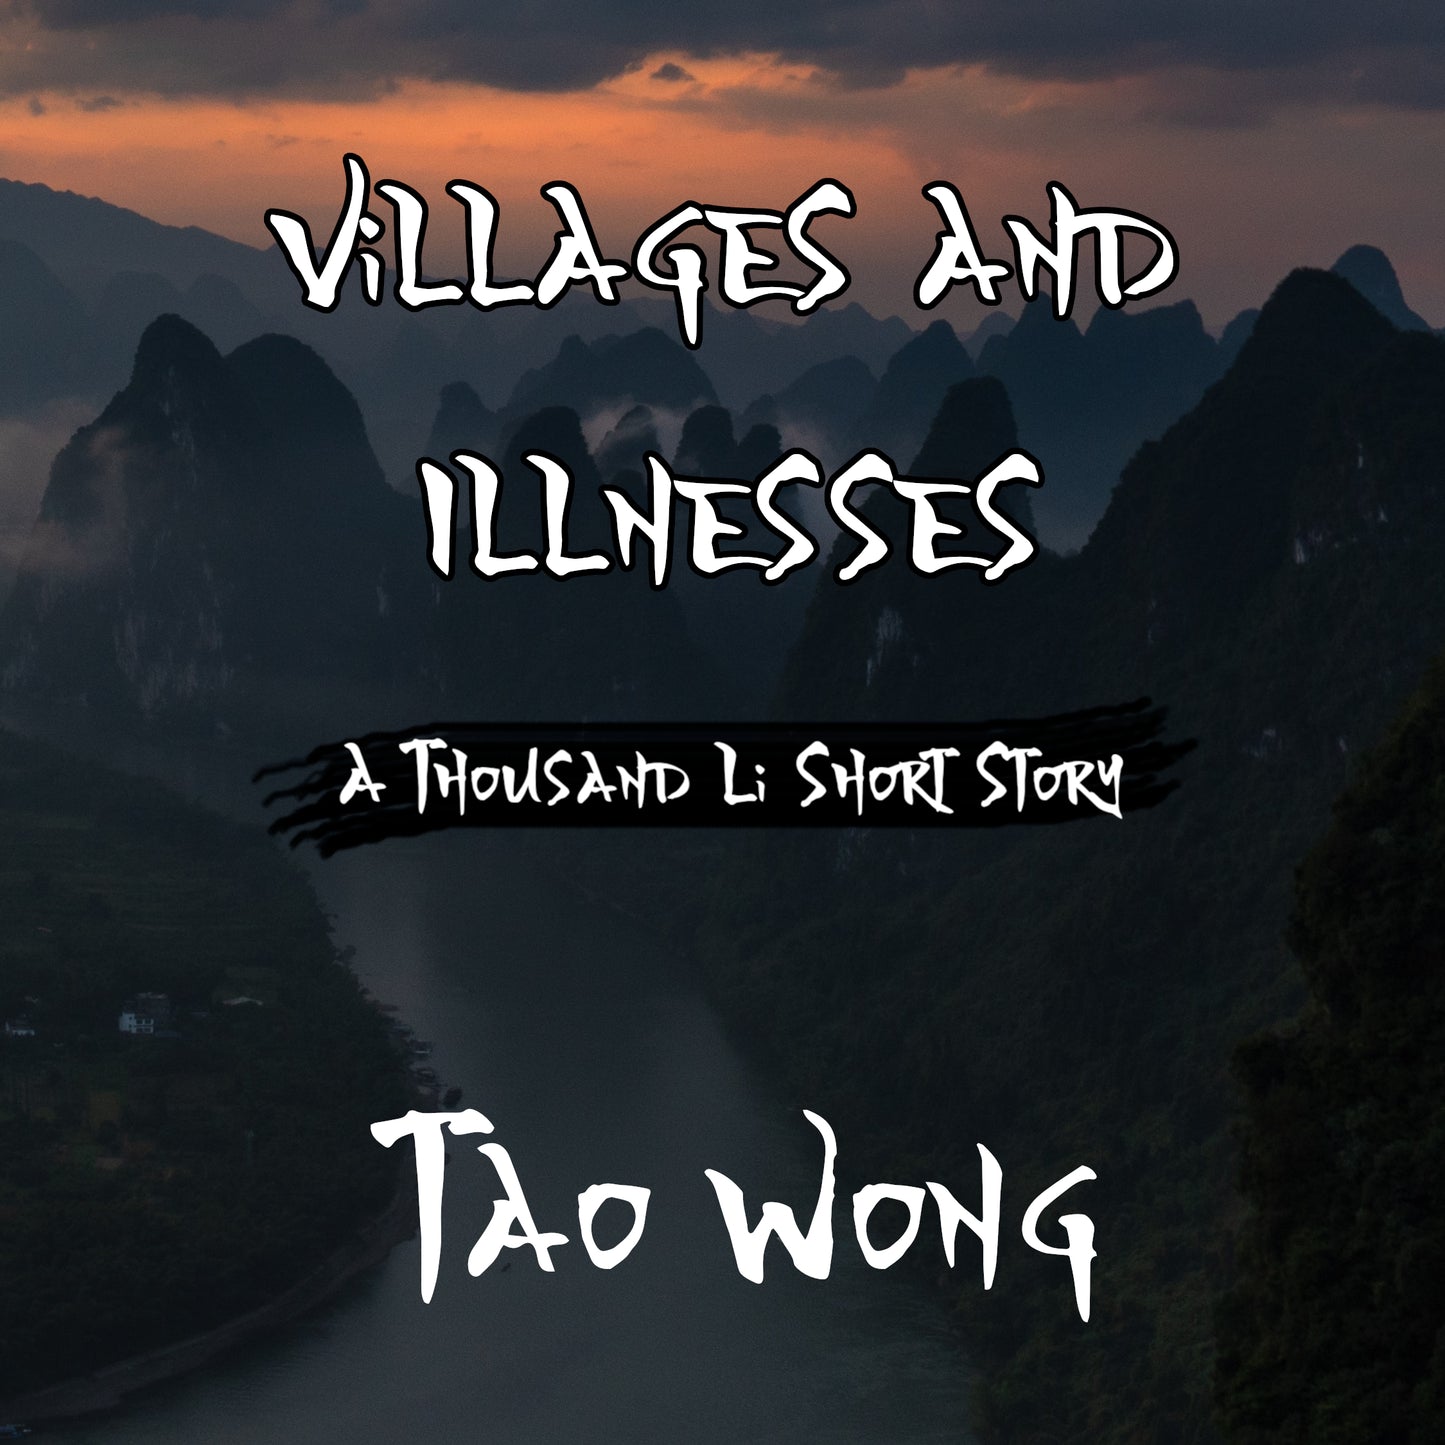 Villages and Illnesses (A Thousand Li Short Story)